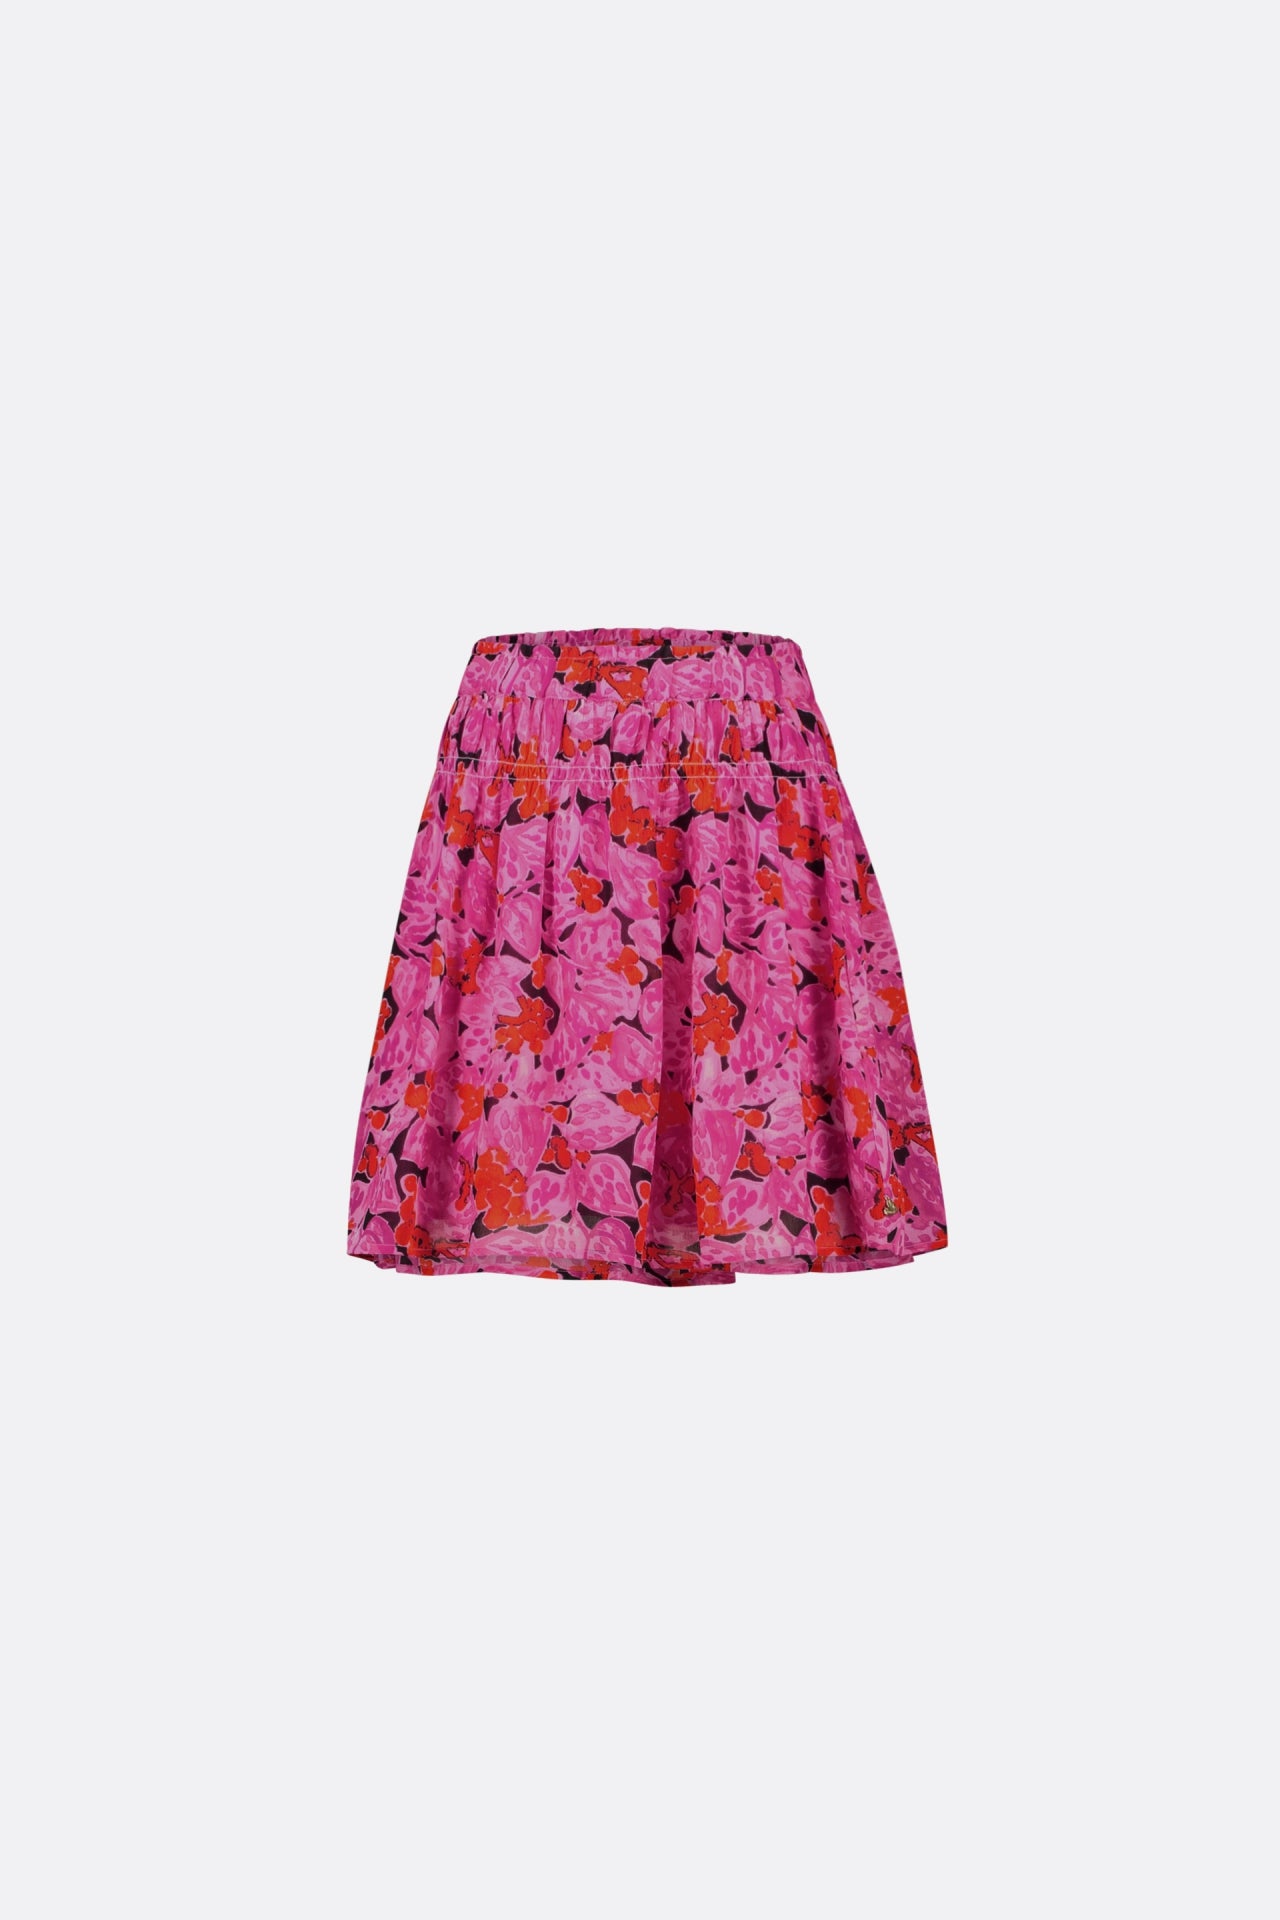 Amber Skirt | Lollipop Pink/Chili